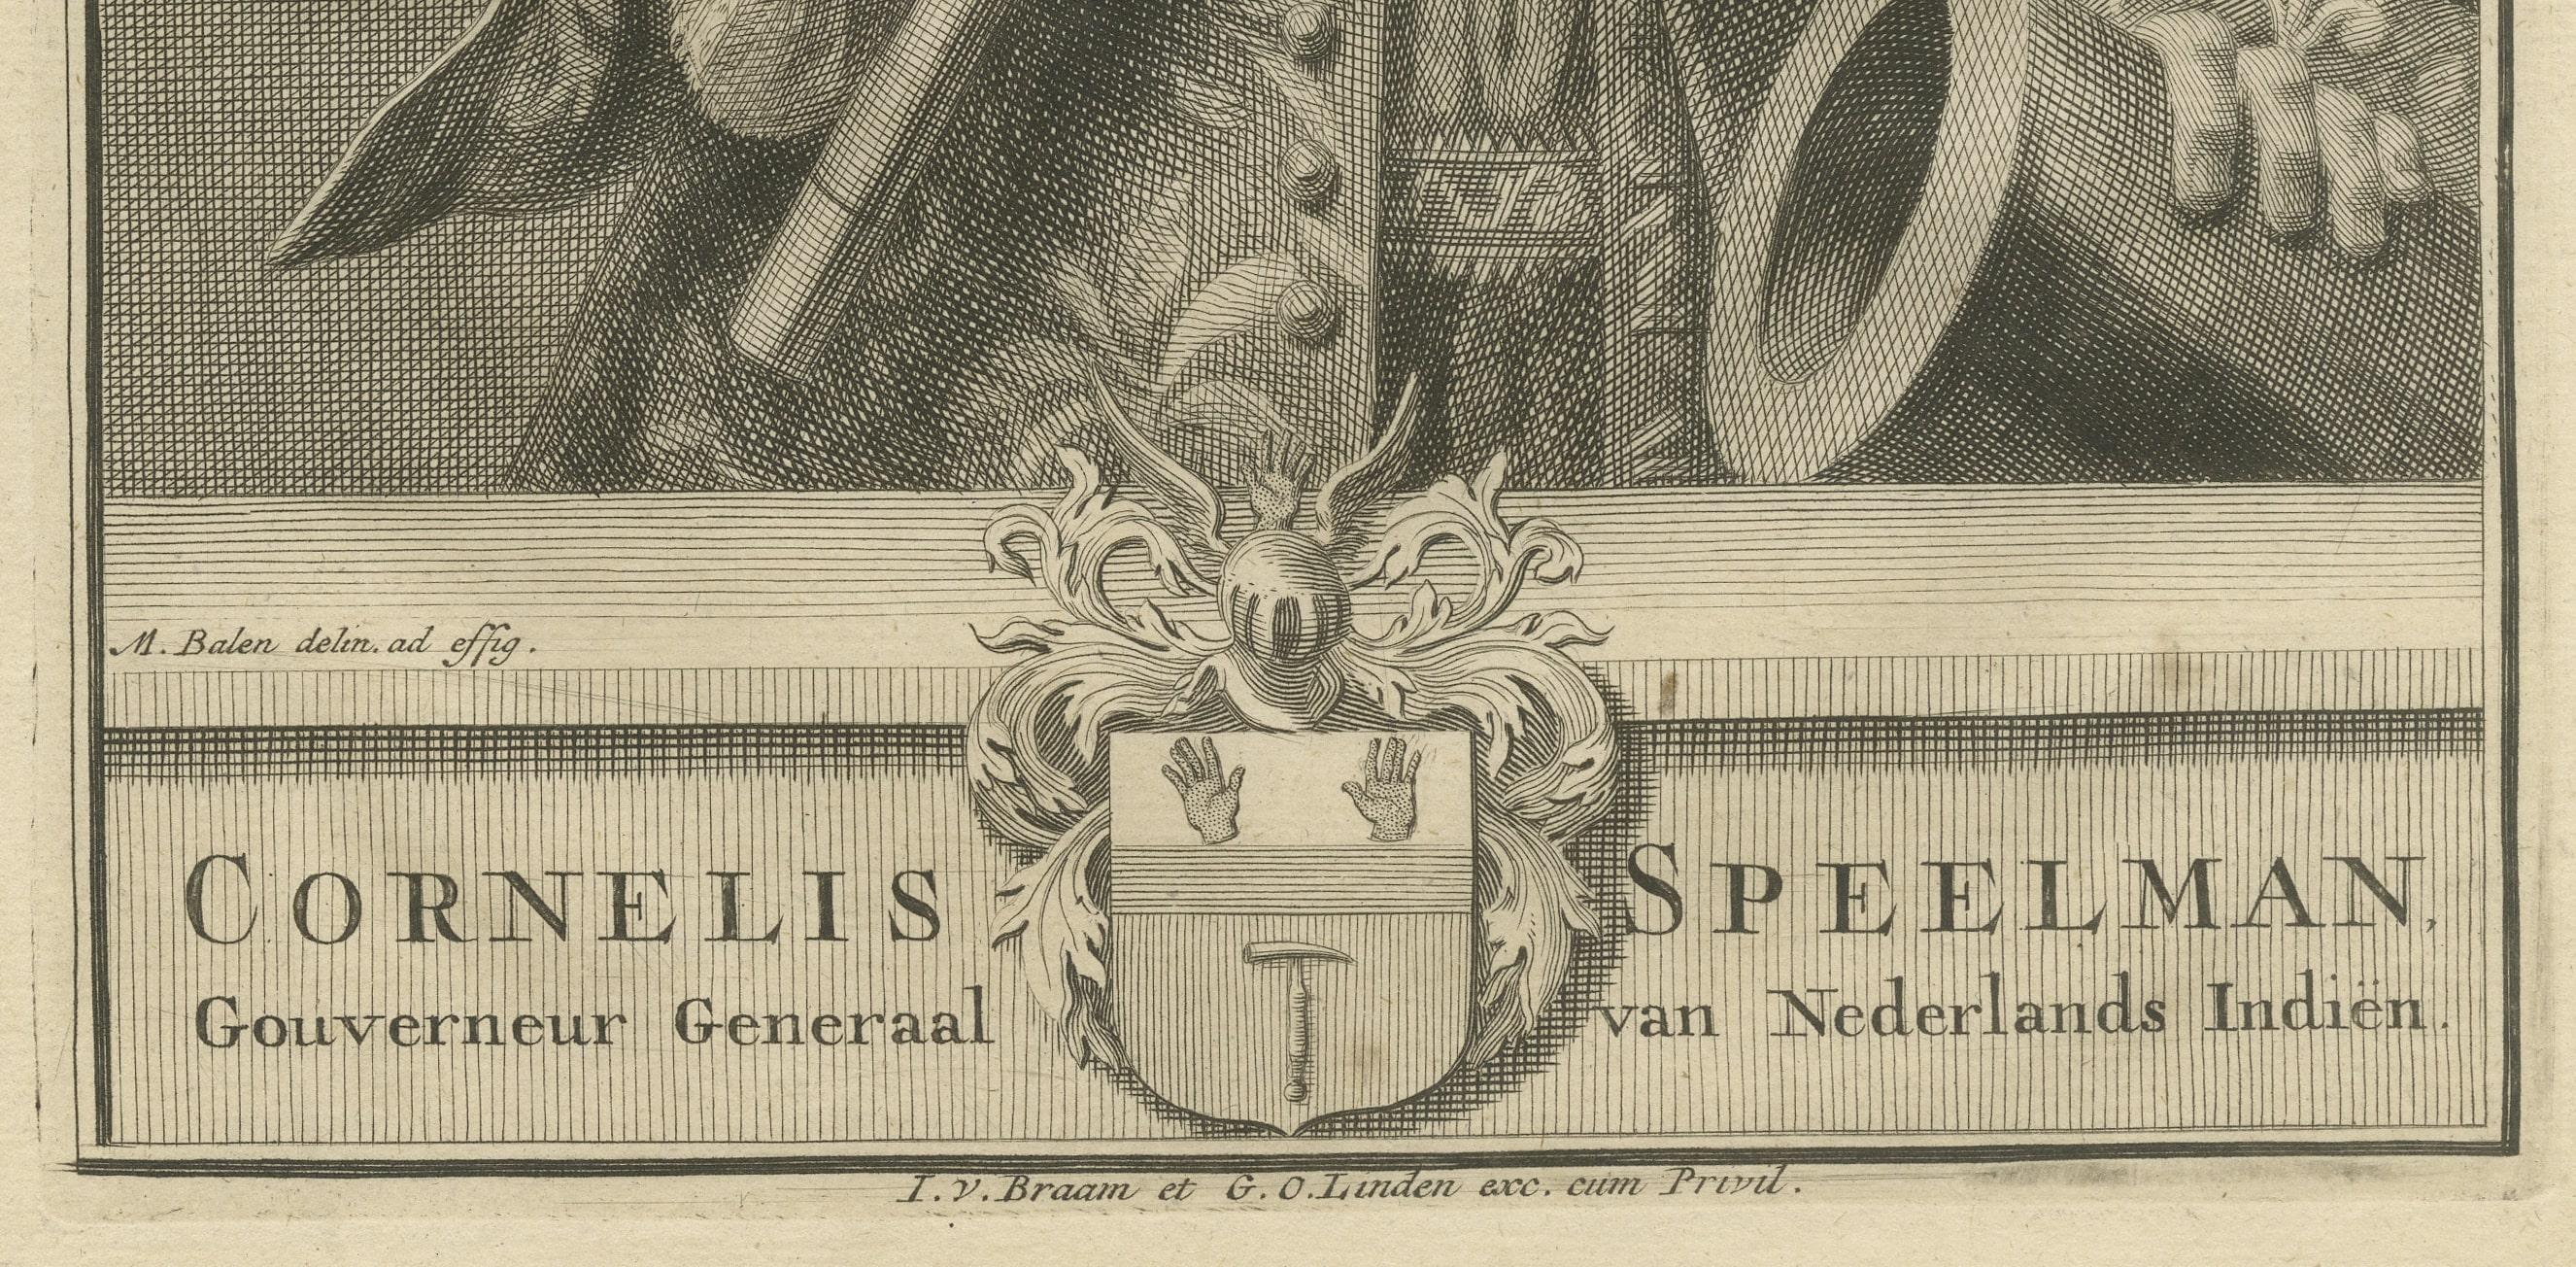 Engraved Cornelis Speelman: Commanding Governor-General of the VOC, Dutch East Indies For Sale